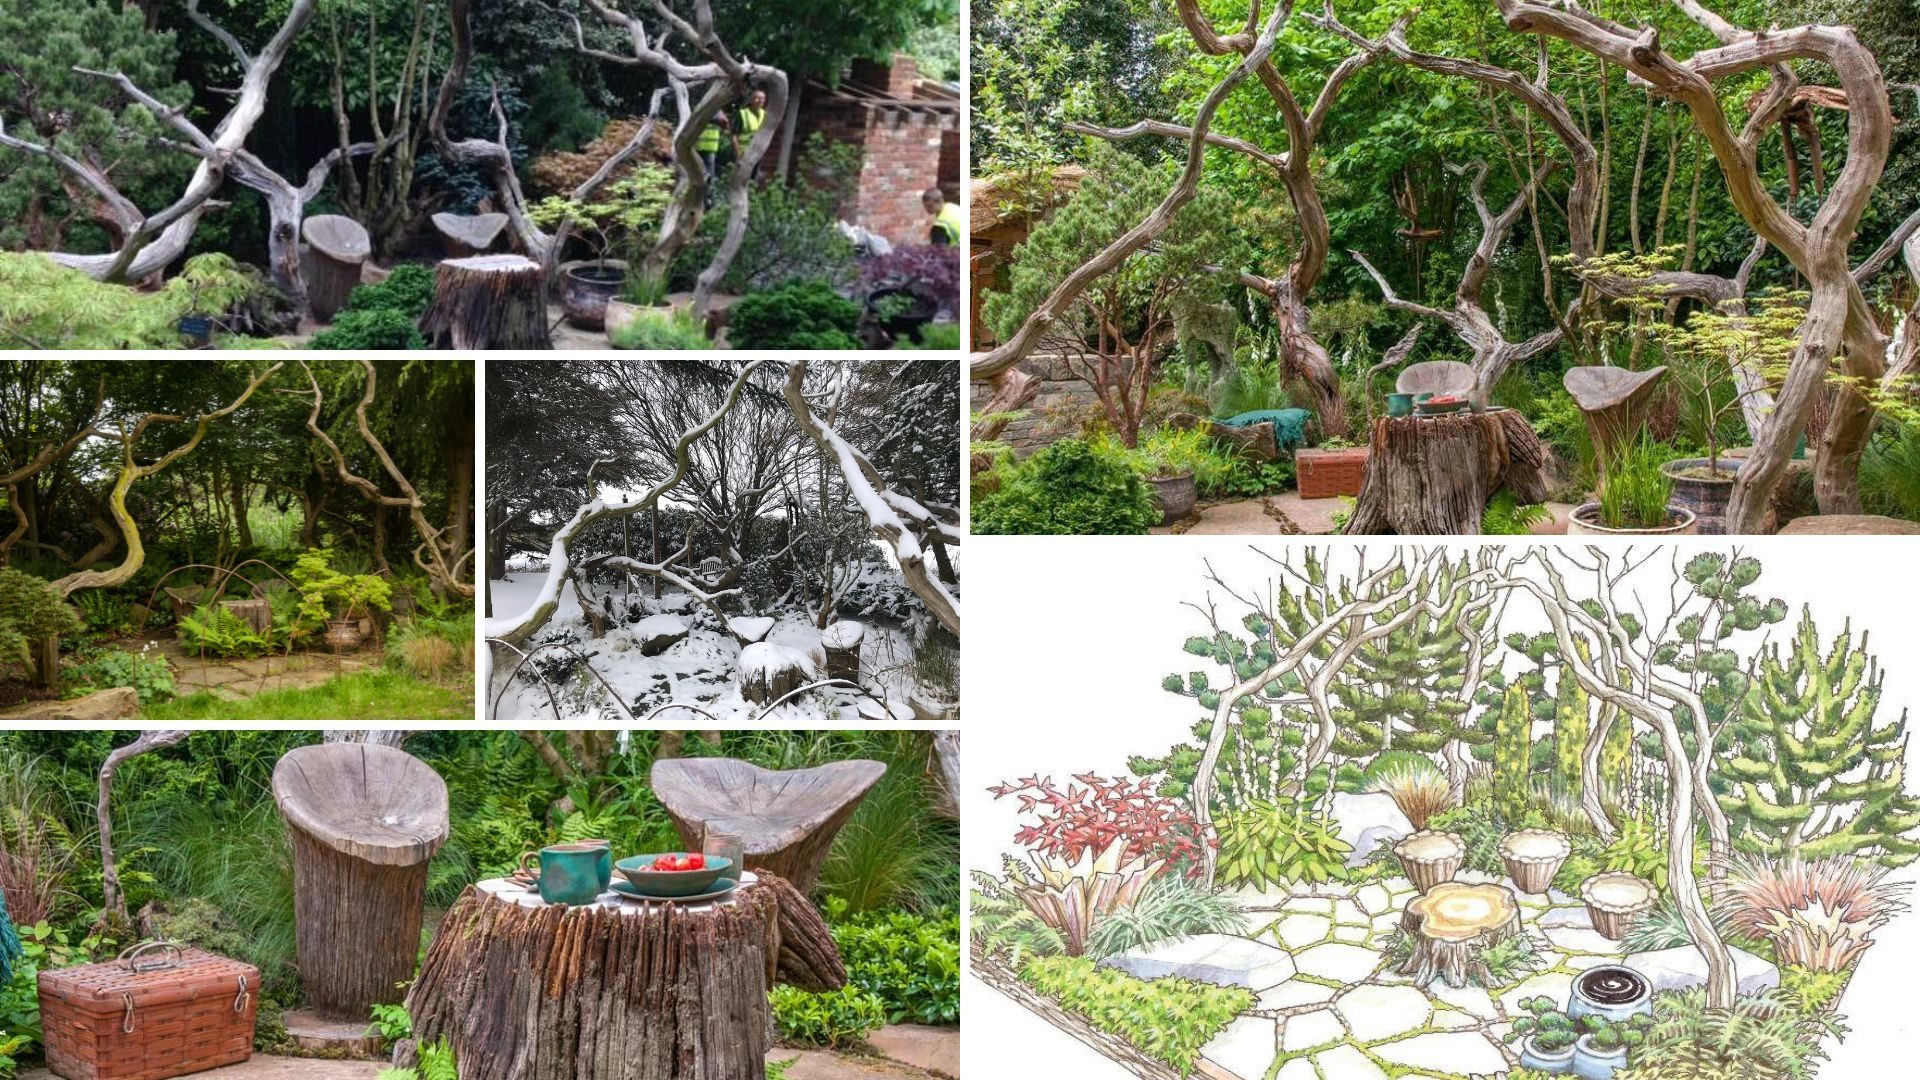 Walker's Sculptors Picnic Garden 2015